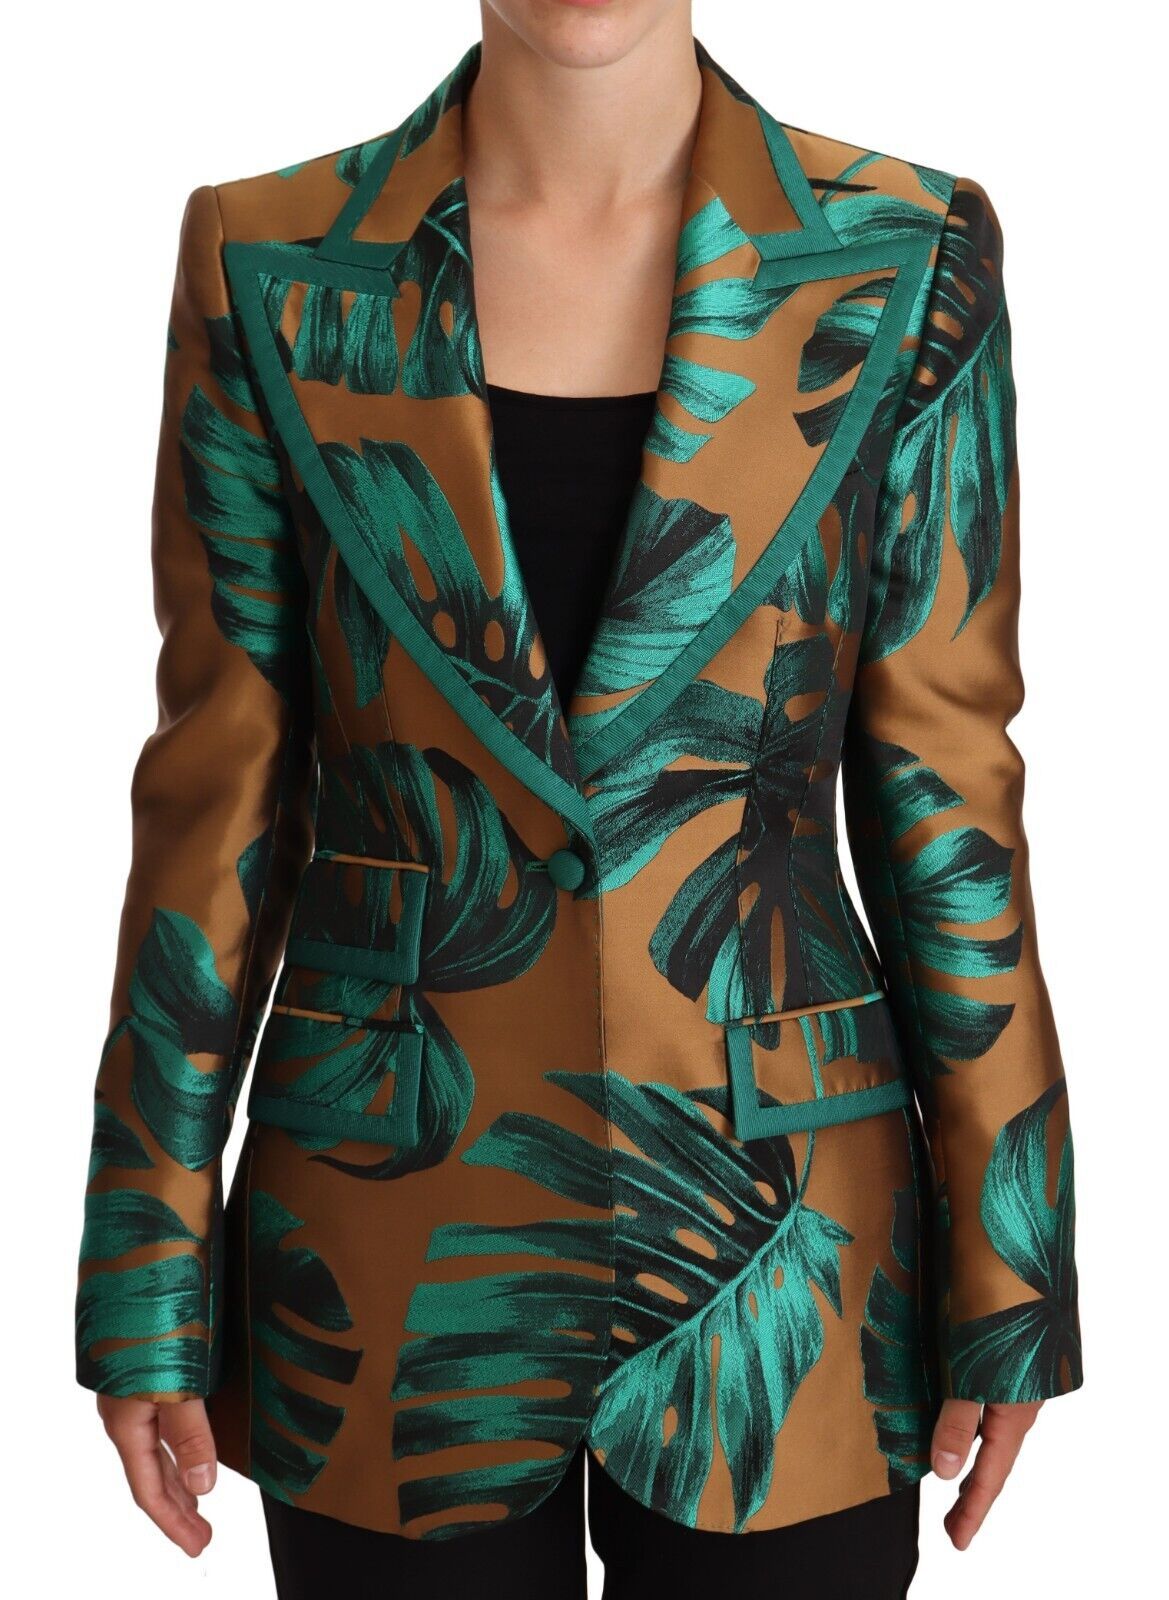 Dolce & Gabbana braunes grünes Blatt Jacquard Coat Jacke